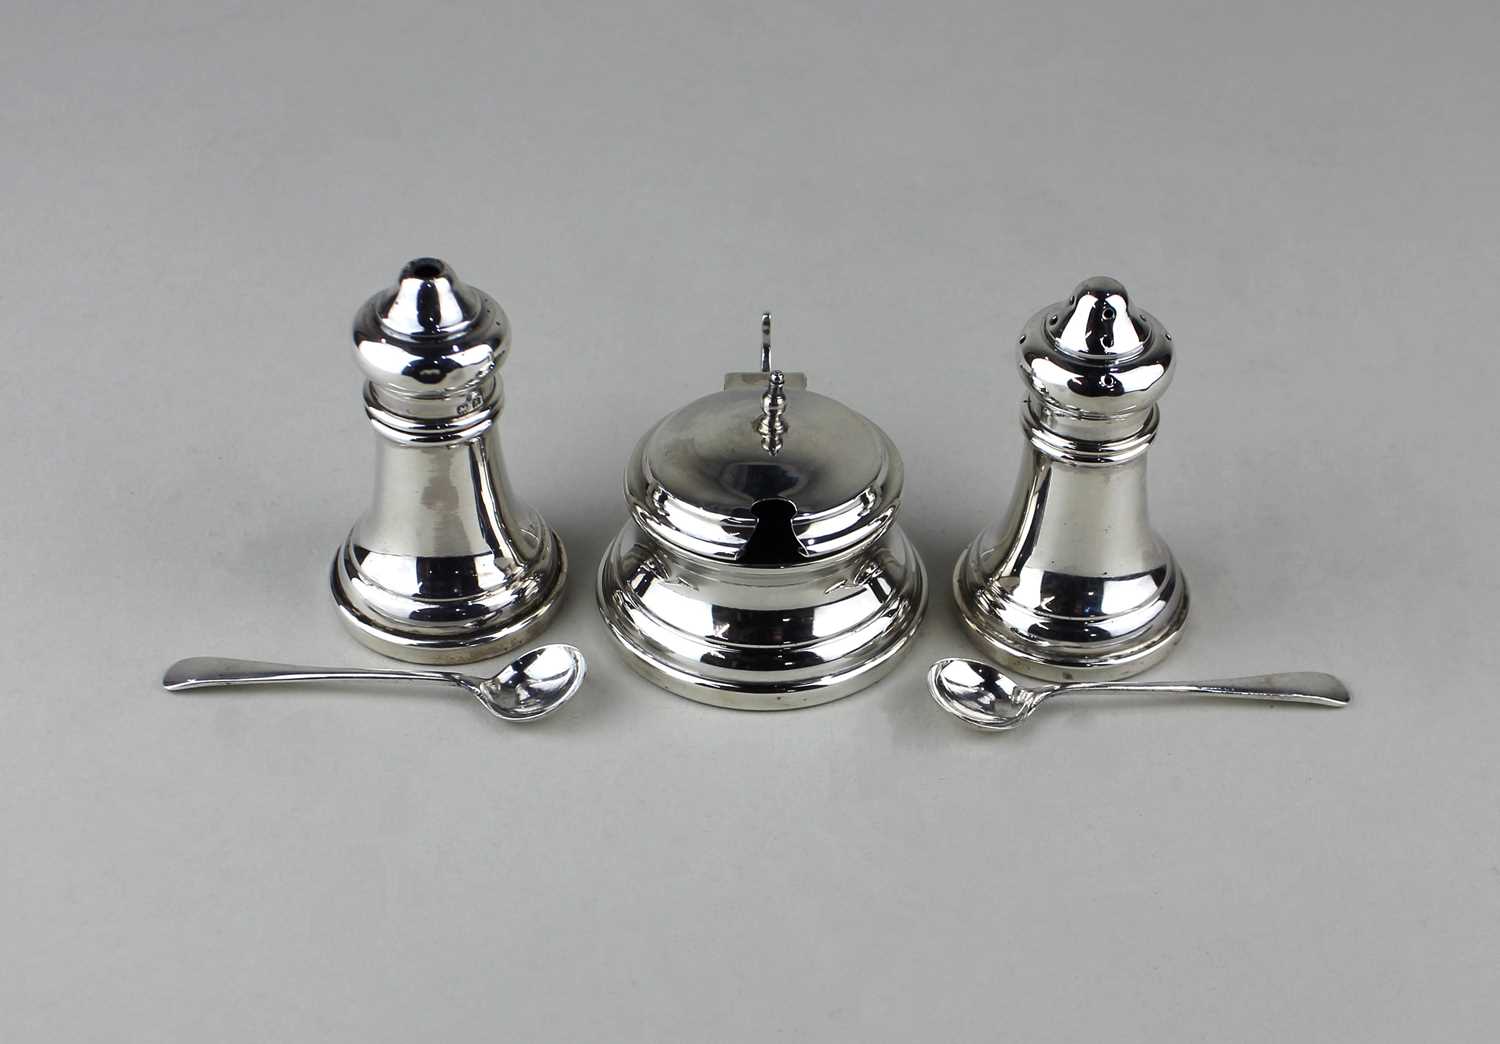 A cased silver cruet set, comprising a salt pot, pepper pot, mustard pot, and 2 matched silver